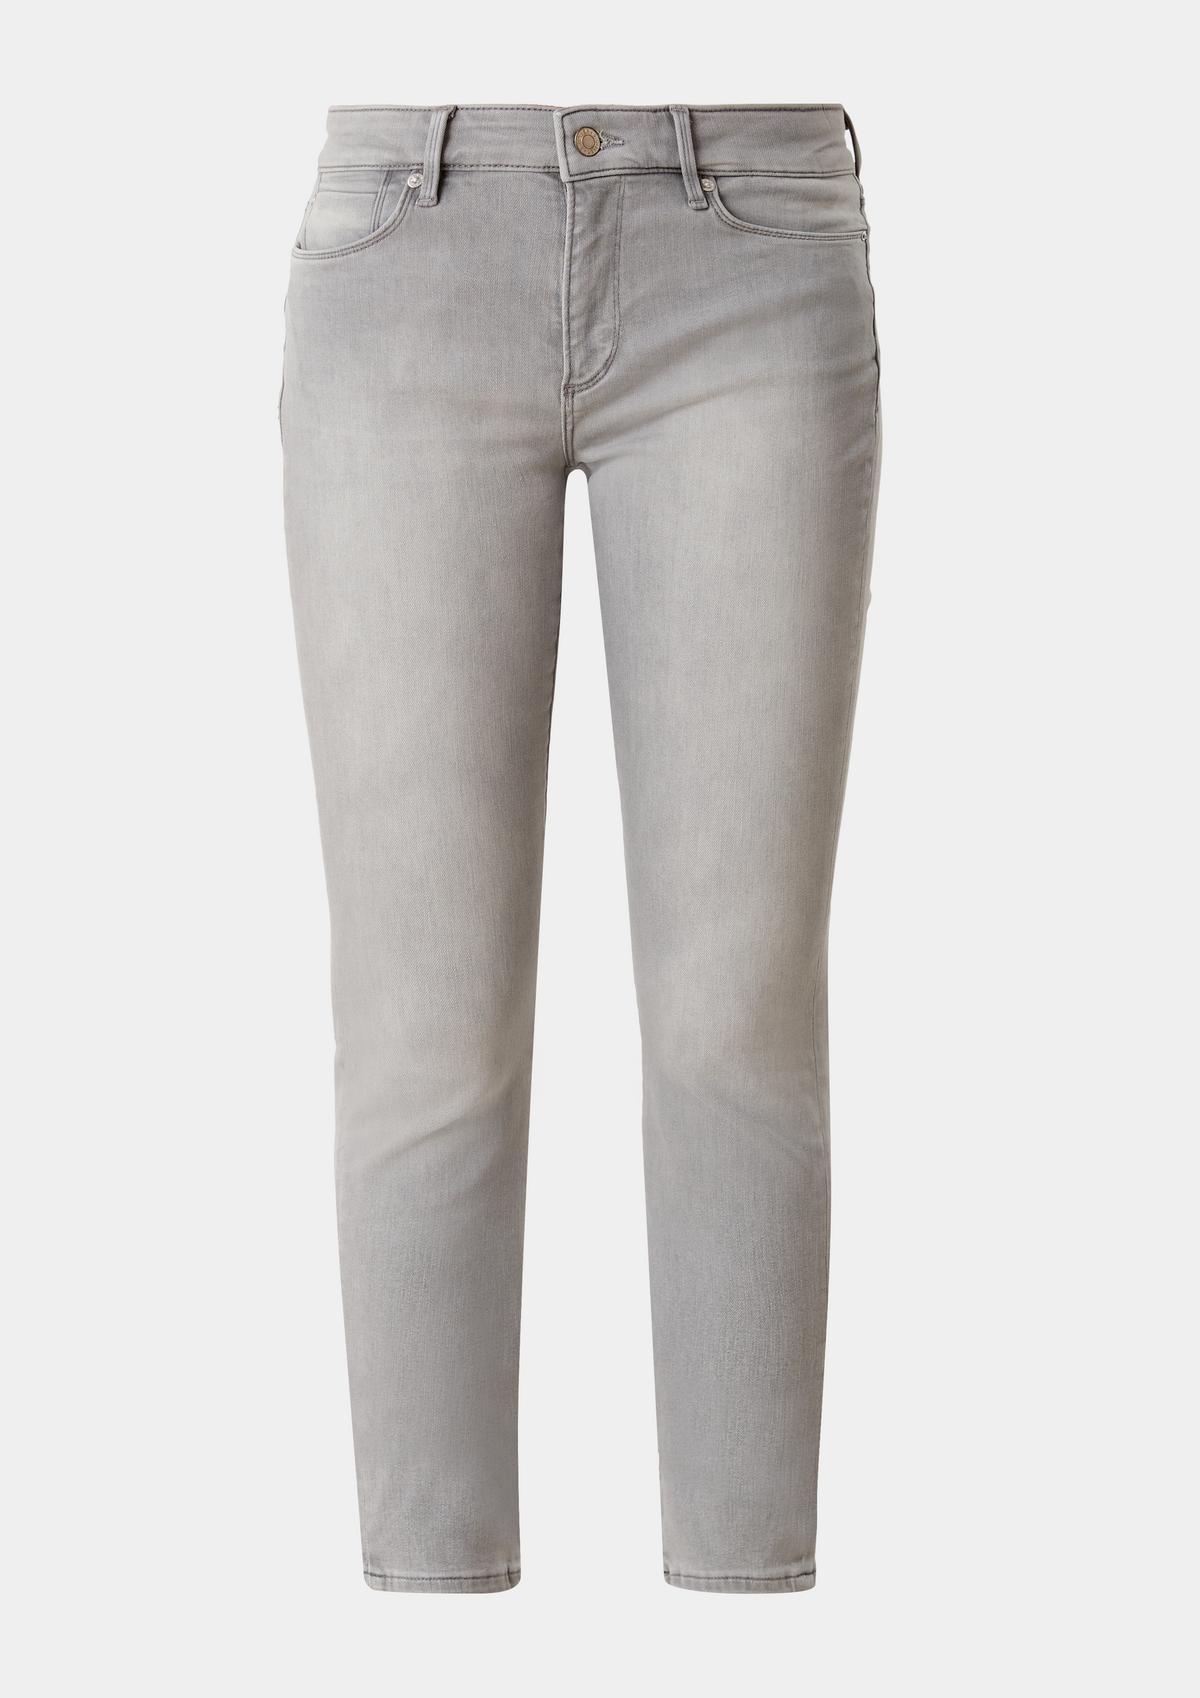 s.Oliver Izabell jeans / skinny fit / mid rise / skinny leg